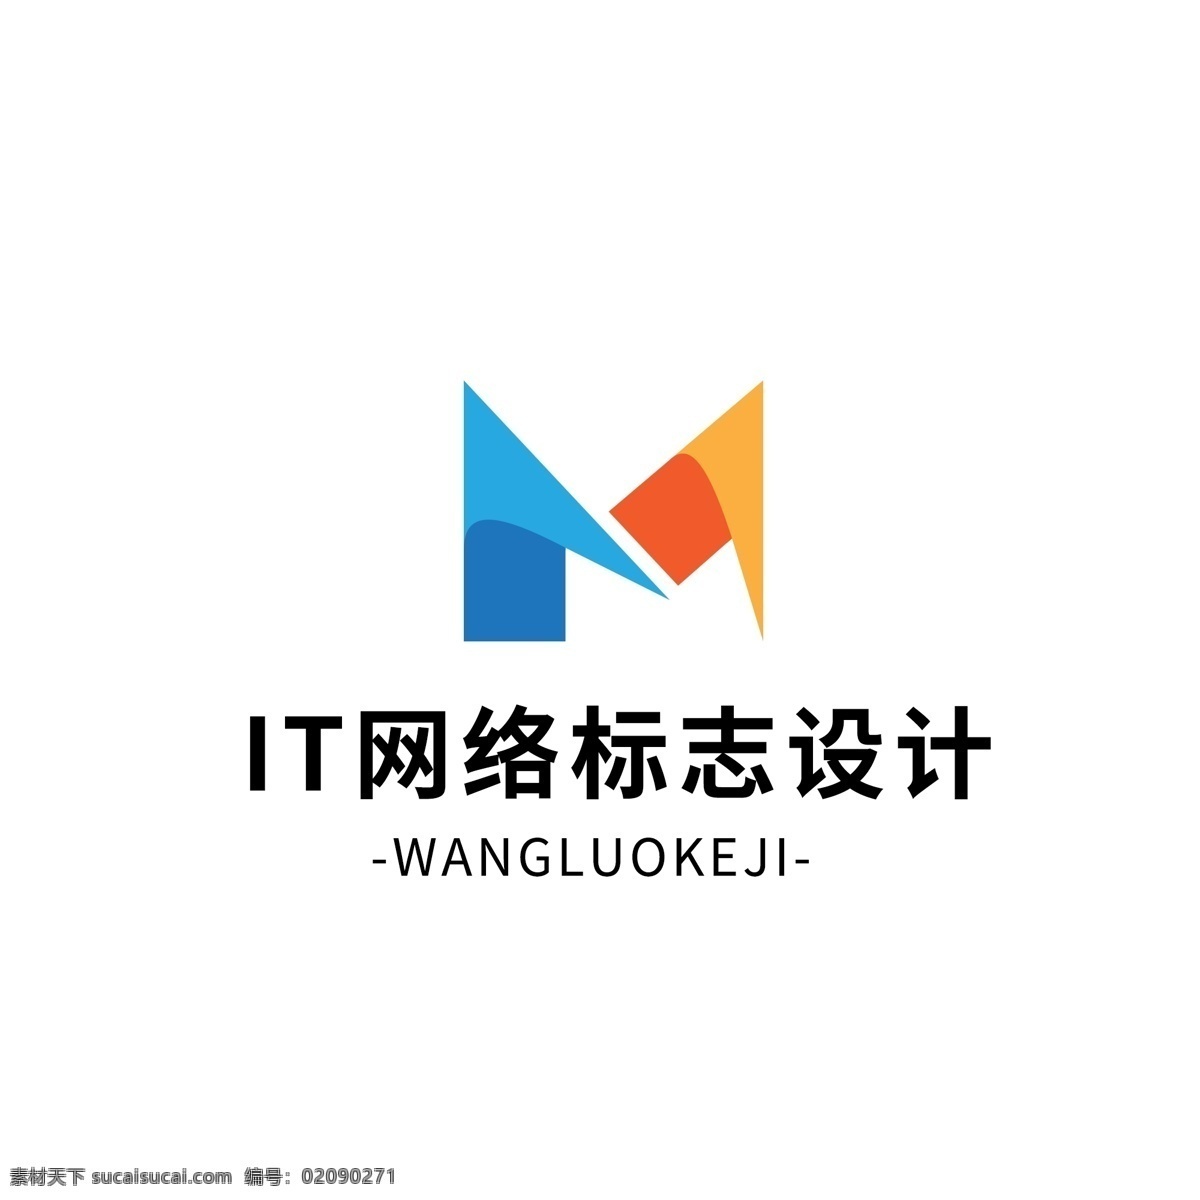 it 网络 标志设计 logo 创意 蓝色 黄色 橙色 矢量 图形 字母